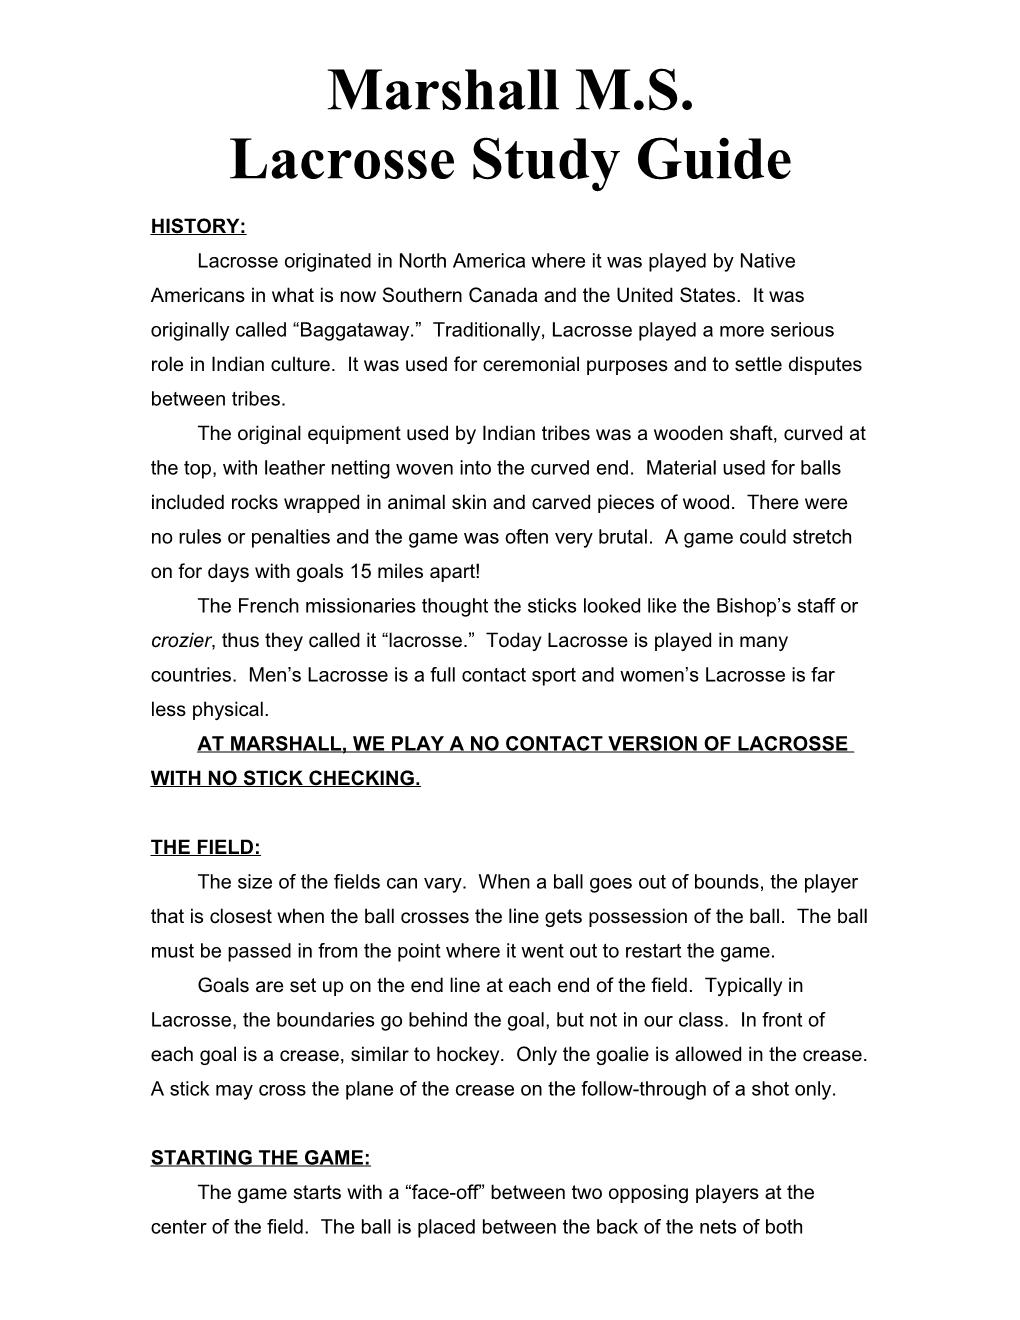 Lacrosse Study Guide s1